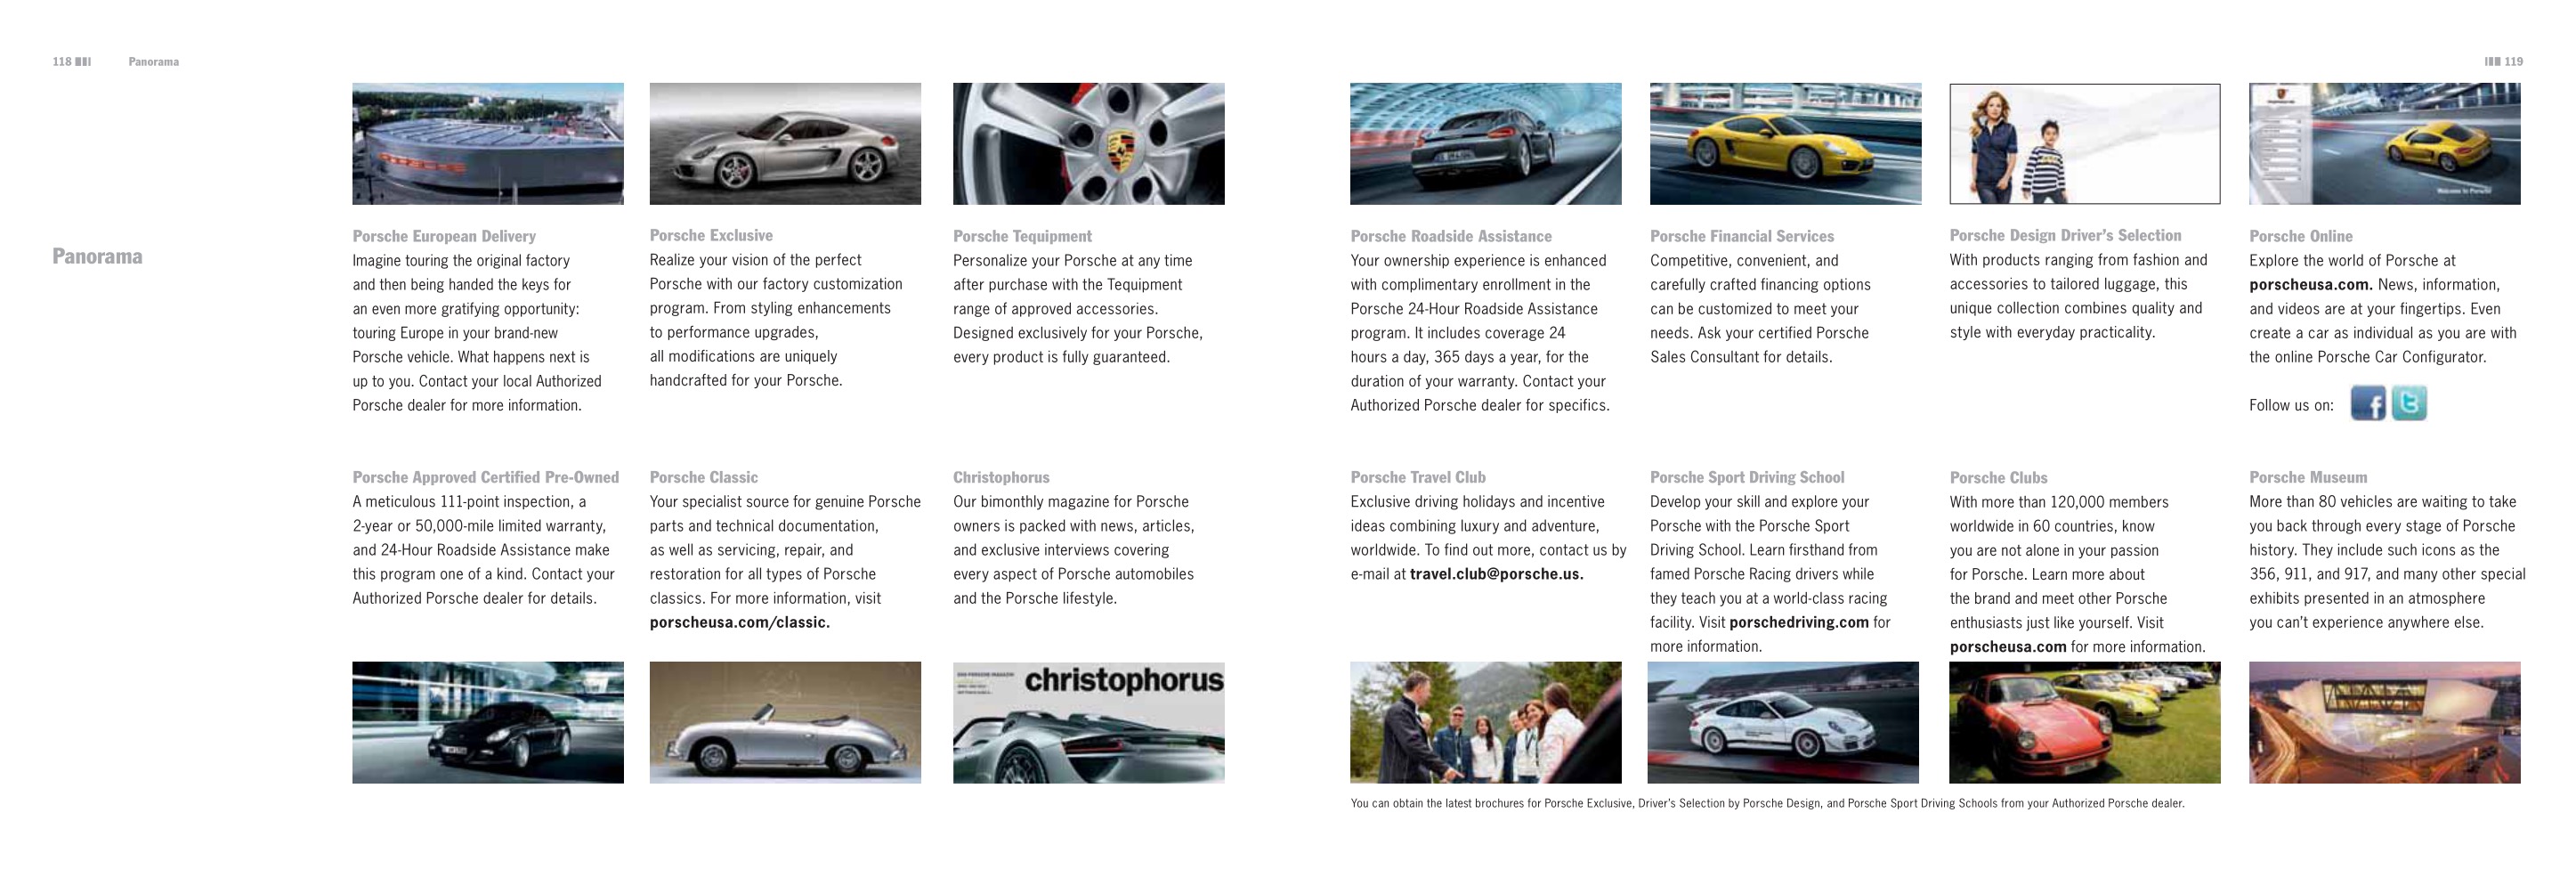 2014 Porsche Cayman Brochure Page 24